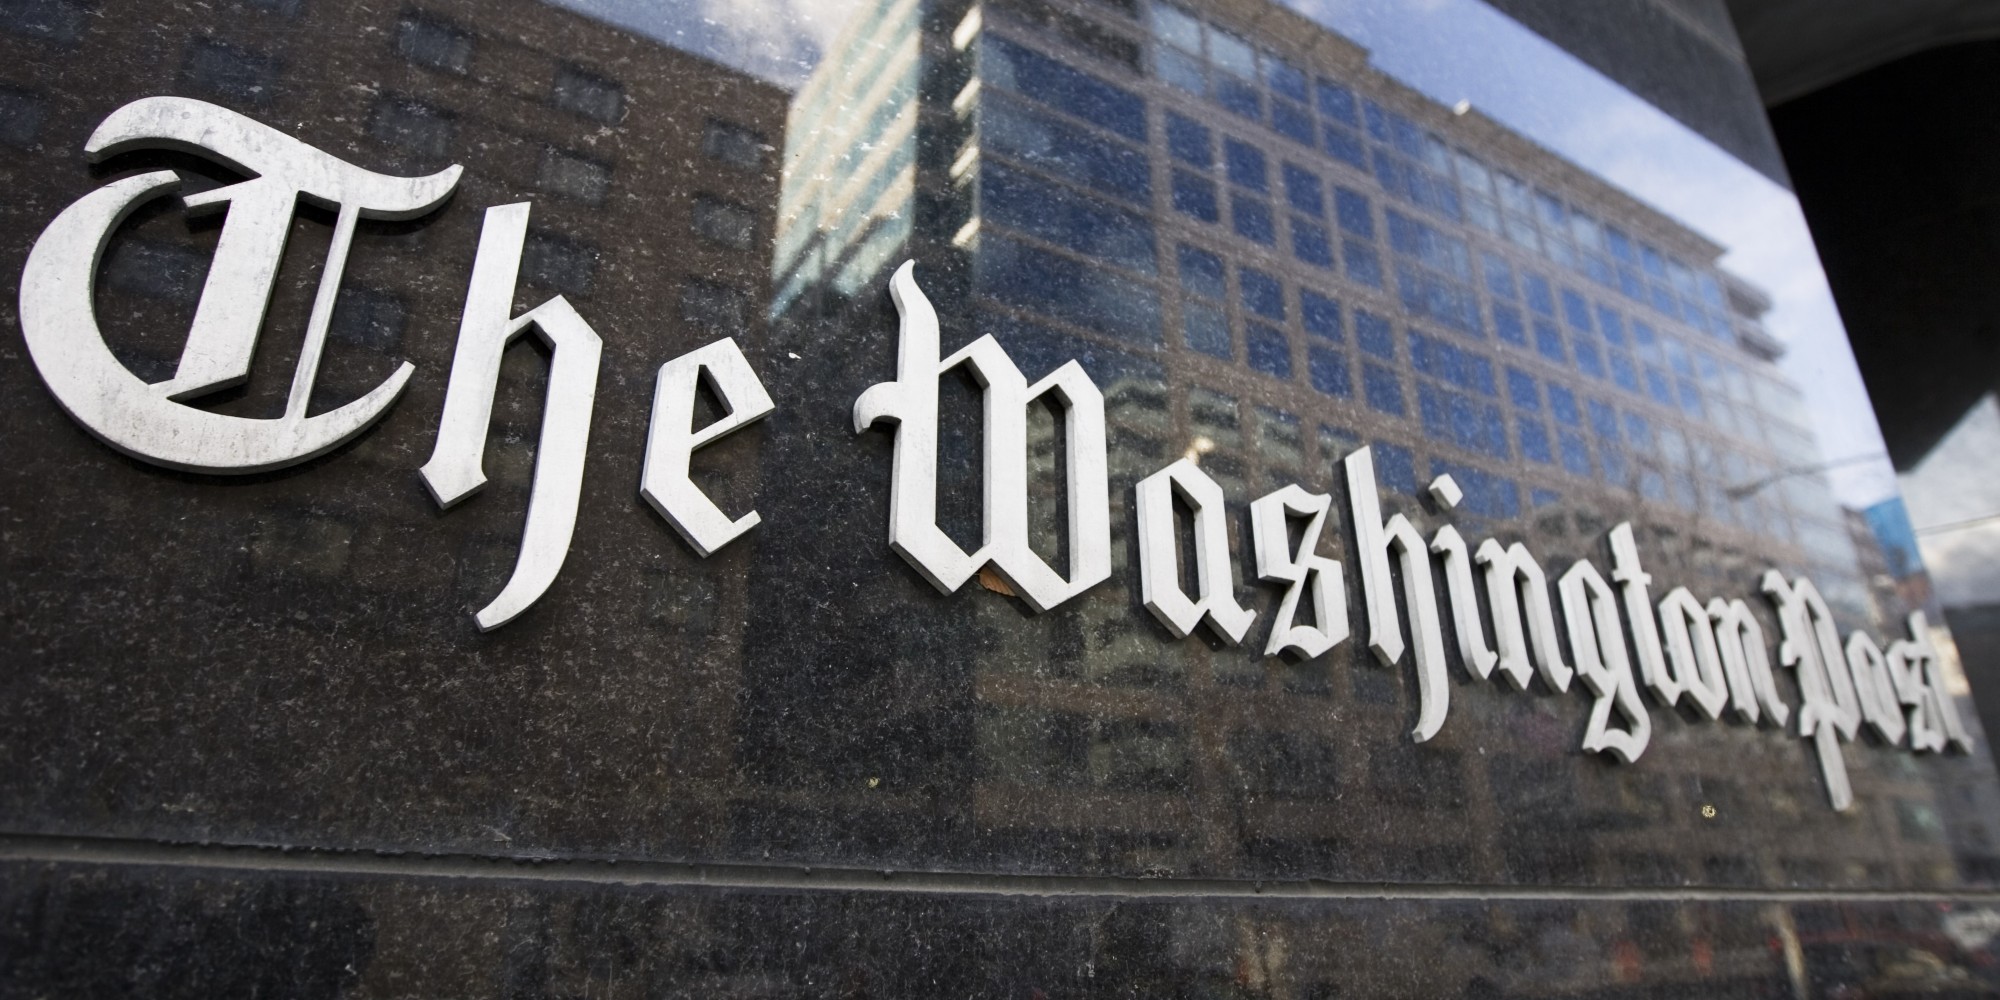 The Washington Post: Tριγμοί στην αμερικάνικη εφημερίδα